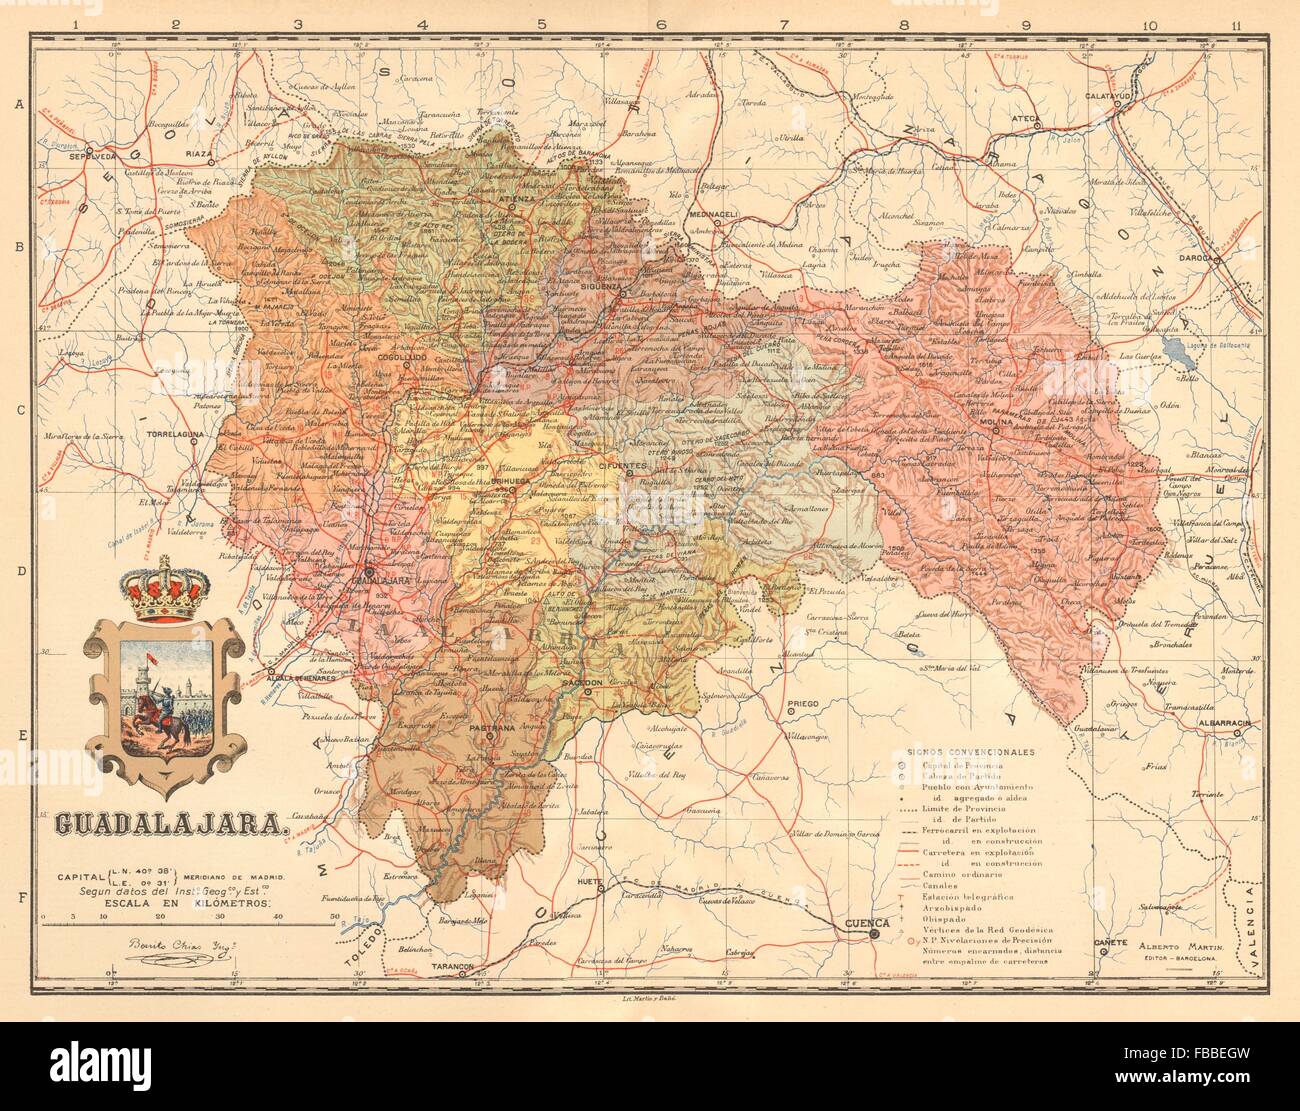 GUADALAJARA. Castilla-La Mancha. Mapa antiguo de la provincia. MARTIN, c1911 Stock Photo